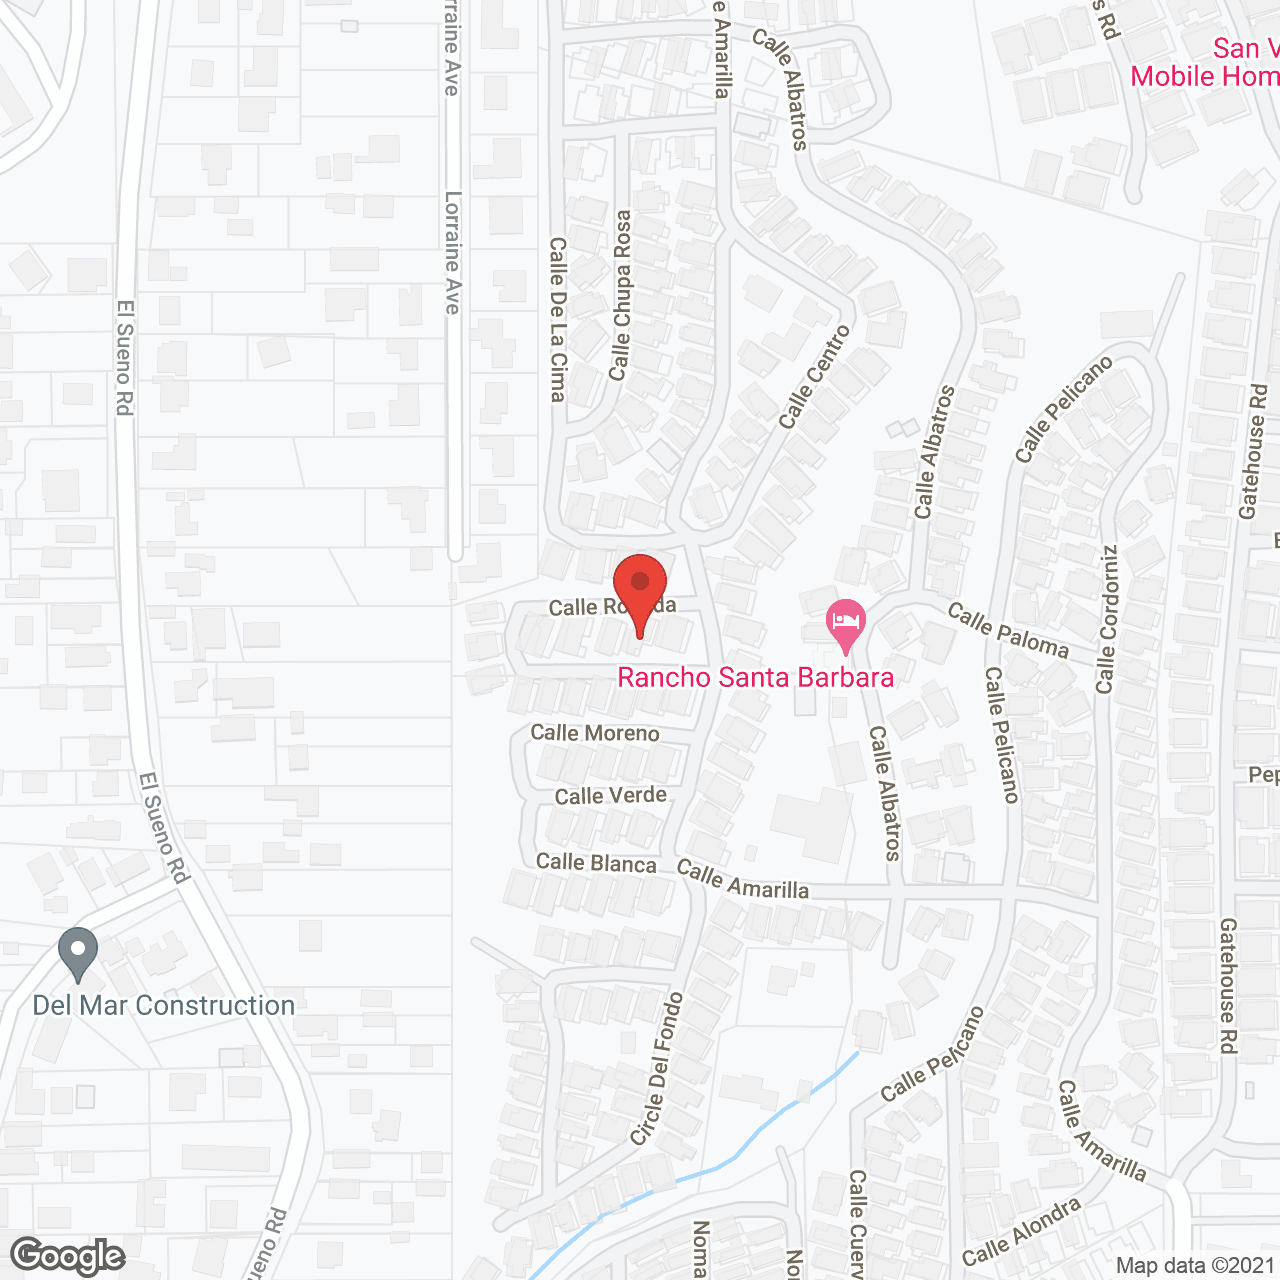 Rancho Santa Barbara(mobile homes) in google map